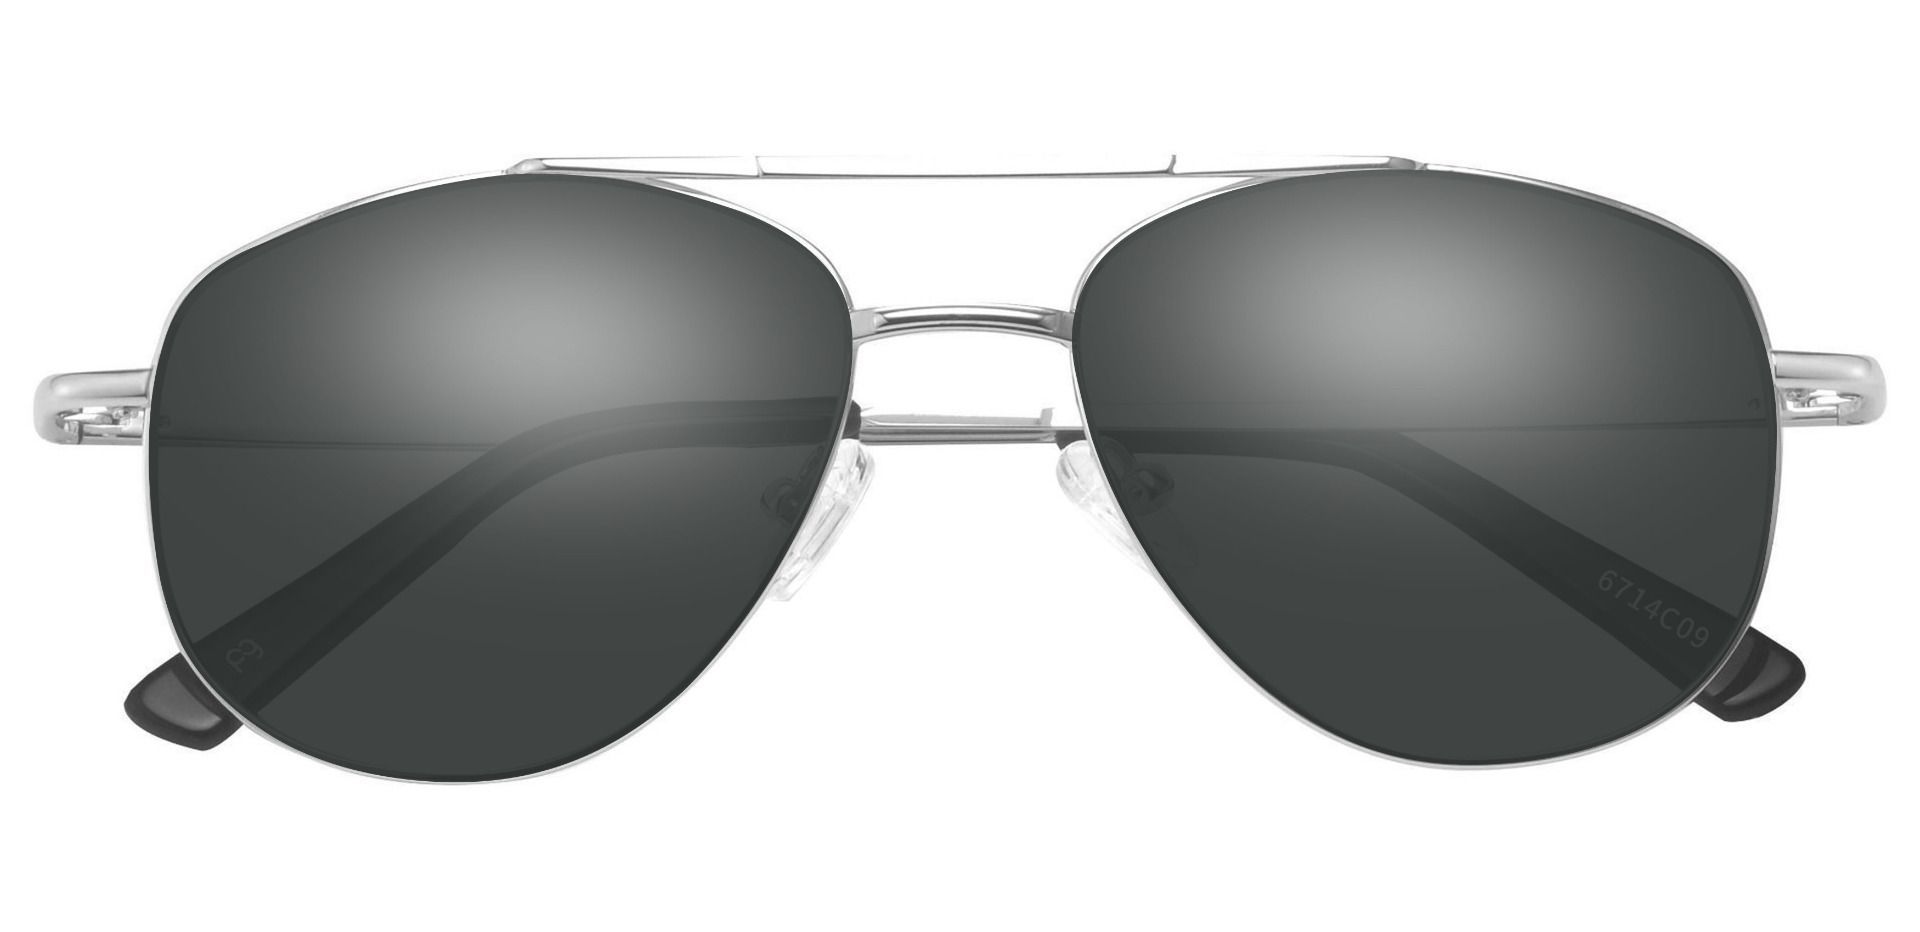 Dwight Aviator Prescription Sunglasses - Clear Frame With Gray Lenses